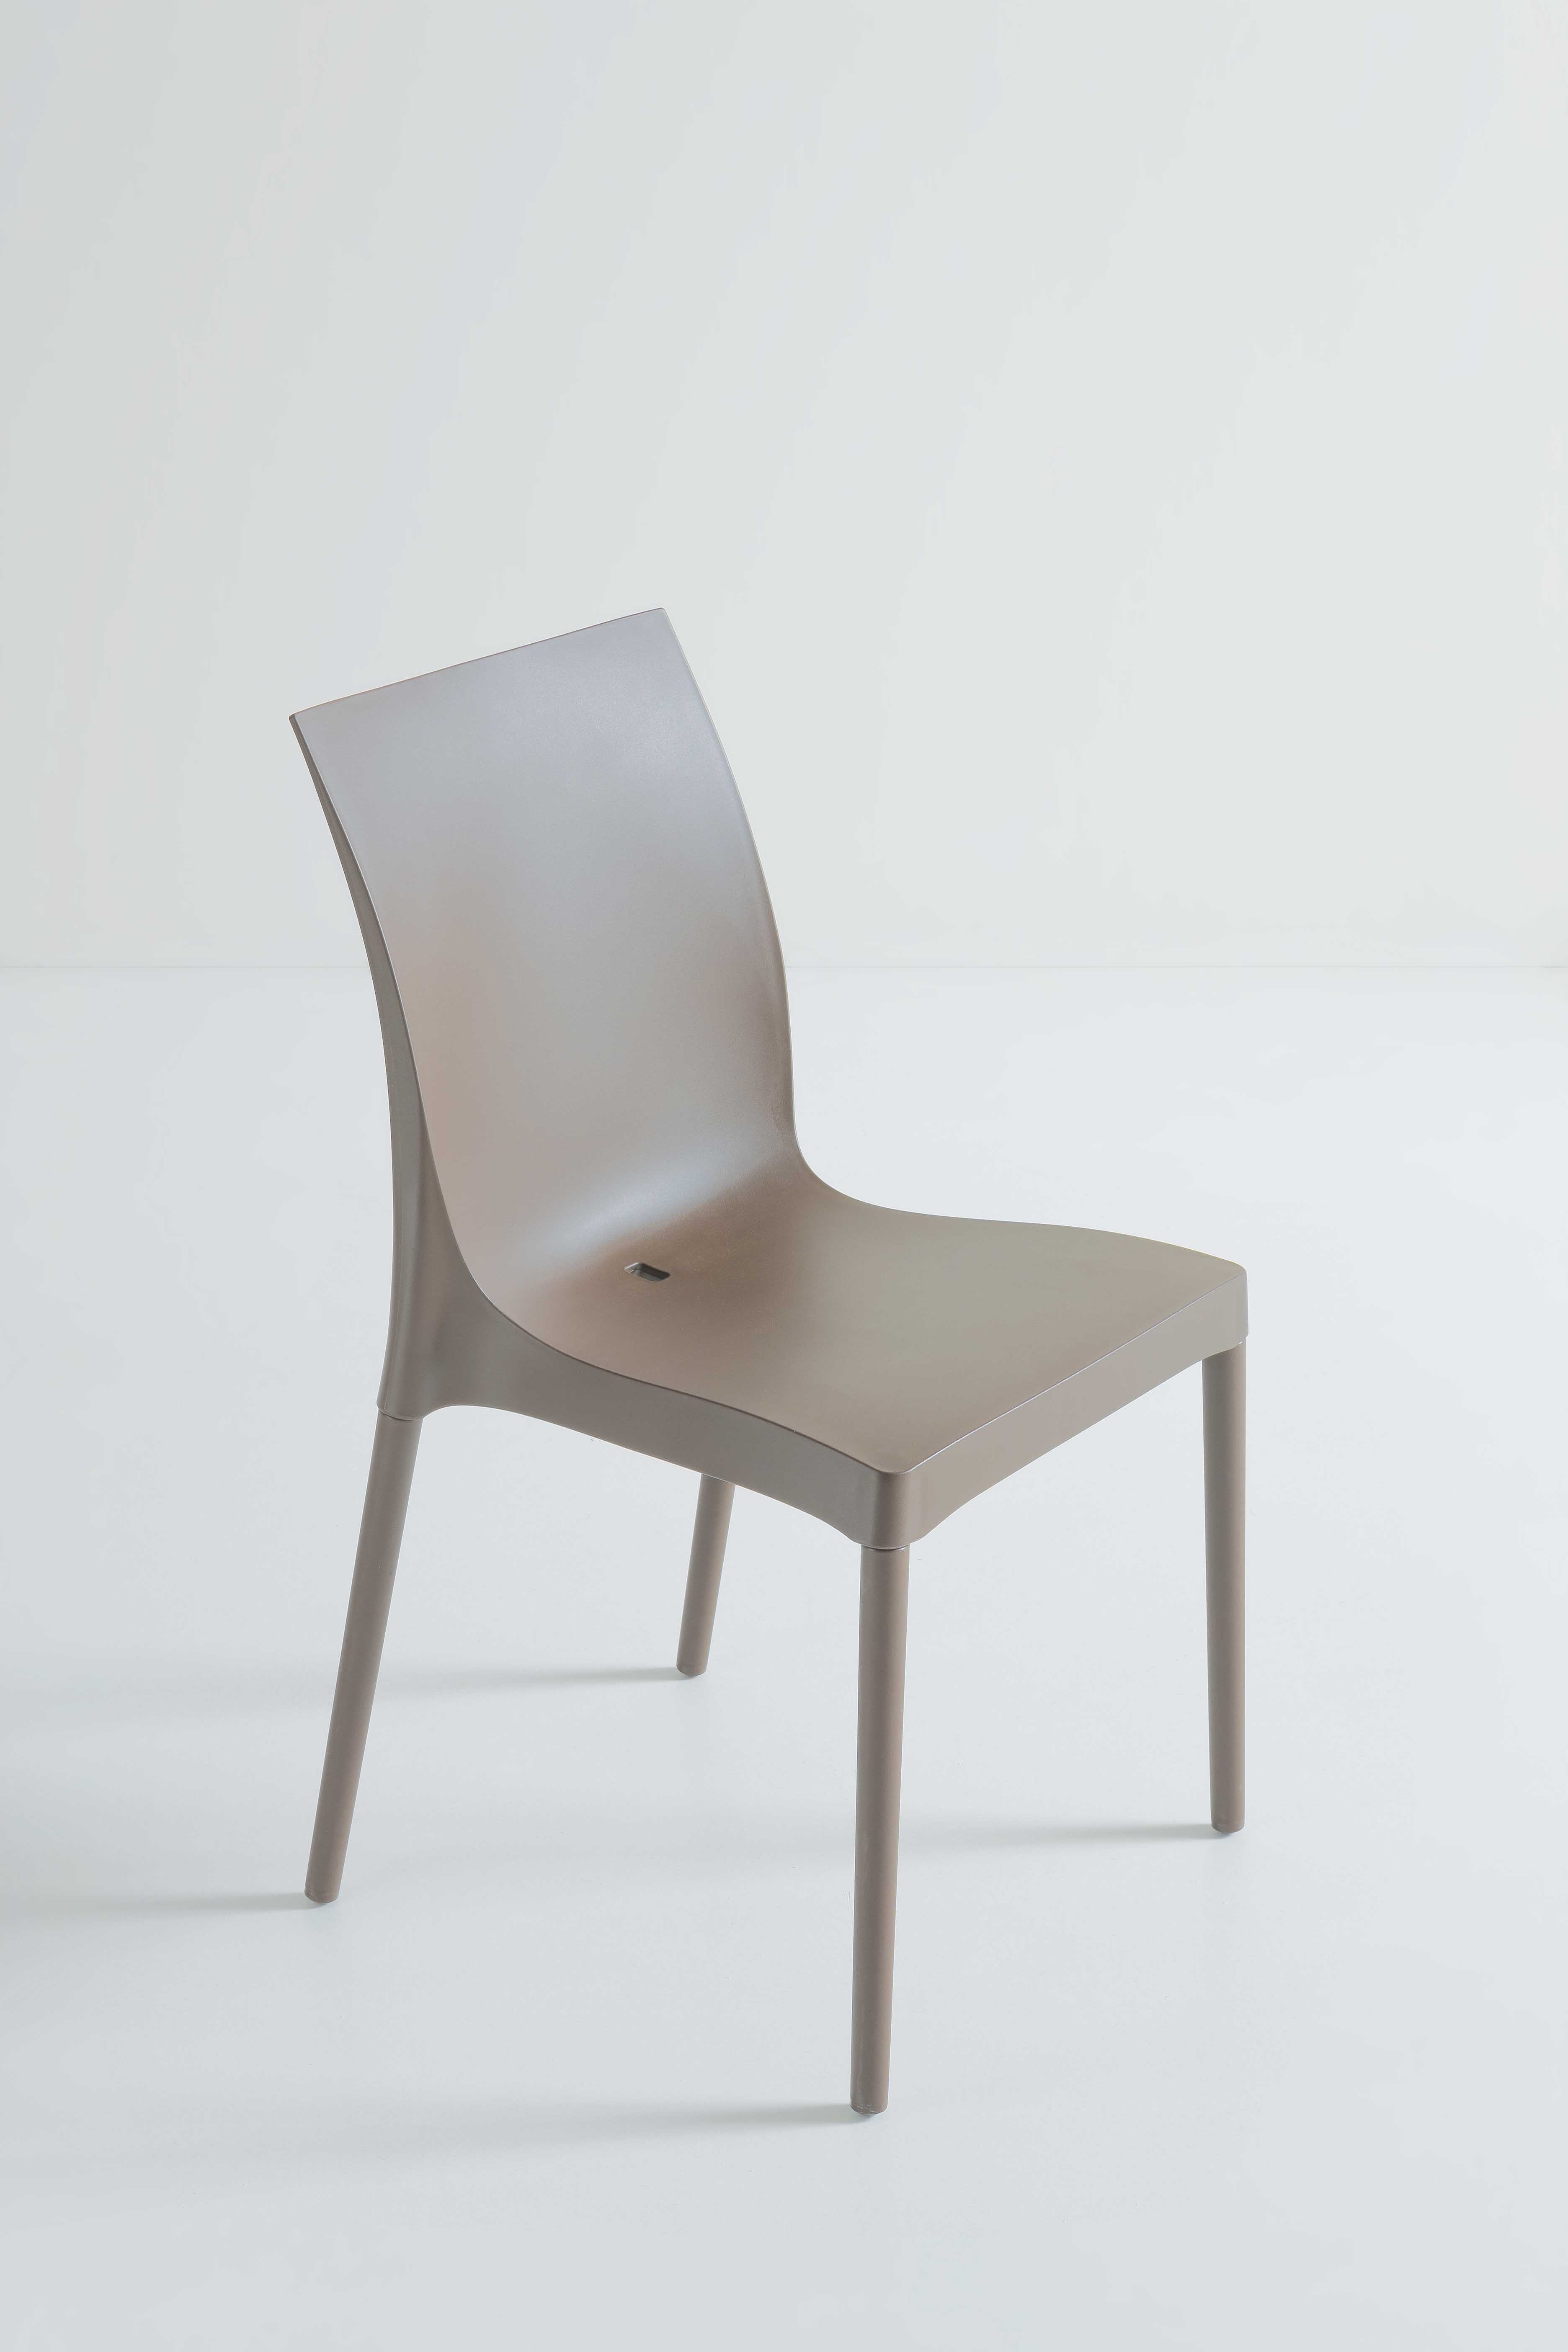 Gaber IRIS Gartenstuhl - stapelbar - Metall mit Kunststoff Sitzschale - Sand